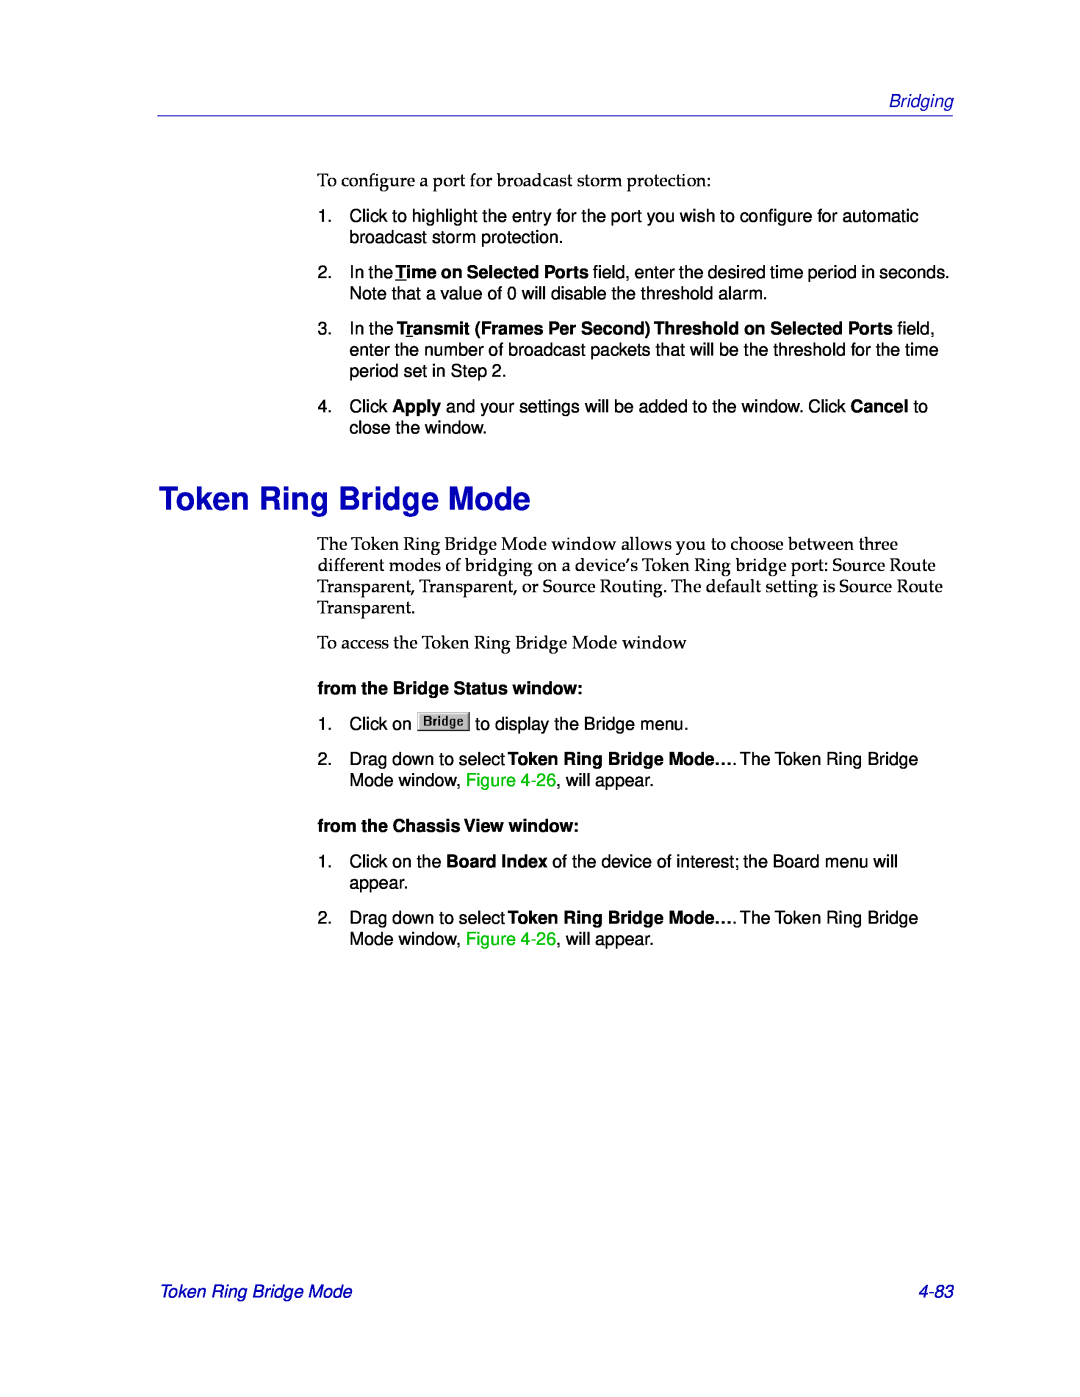 Cabletron Systems CSX200, CSX400 manual Token Ring Bridge Mode, 4-83, Bridging, from the Bridge Status window 